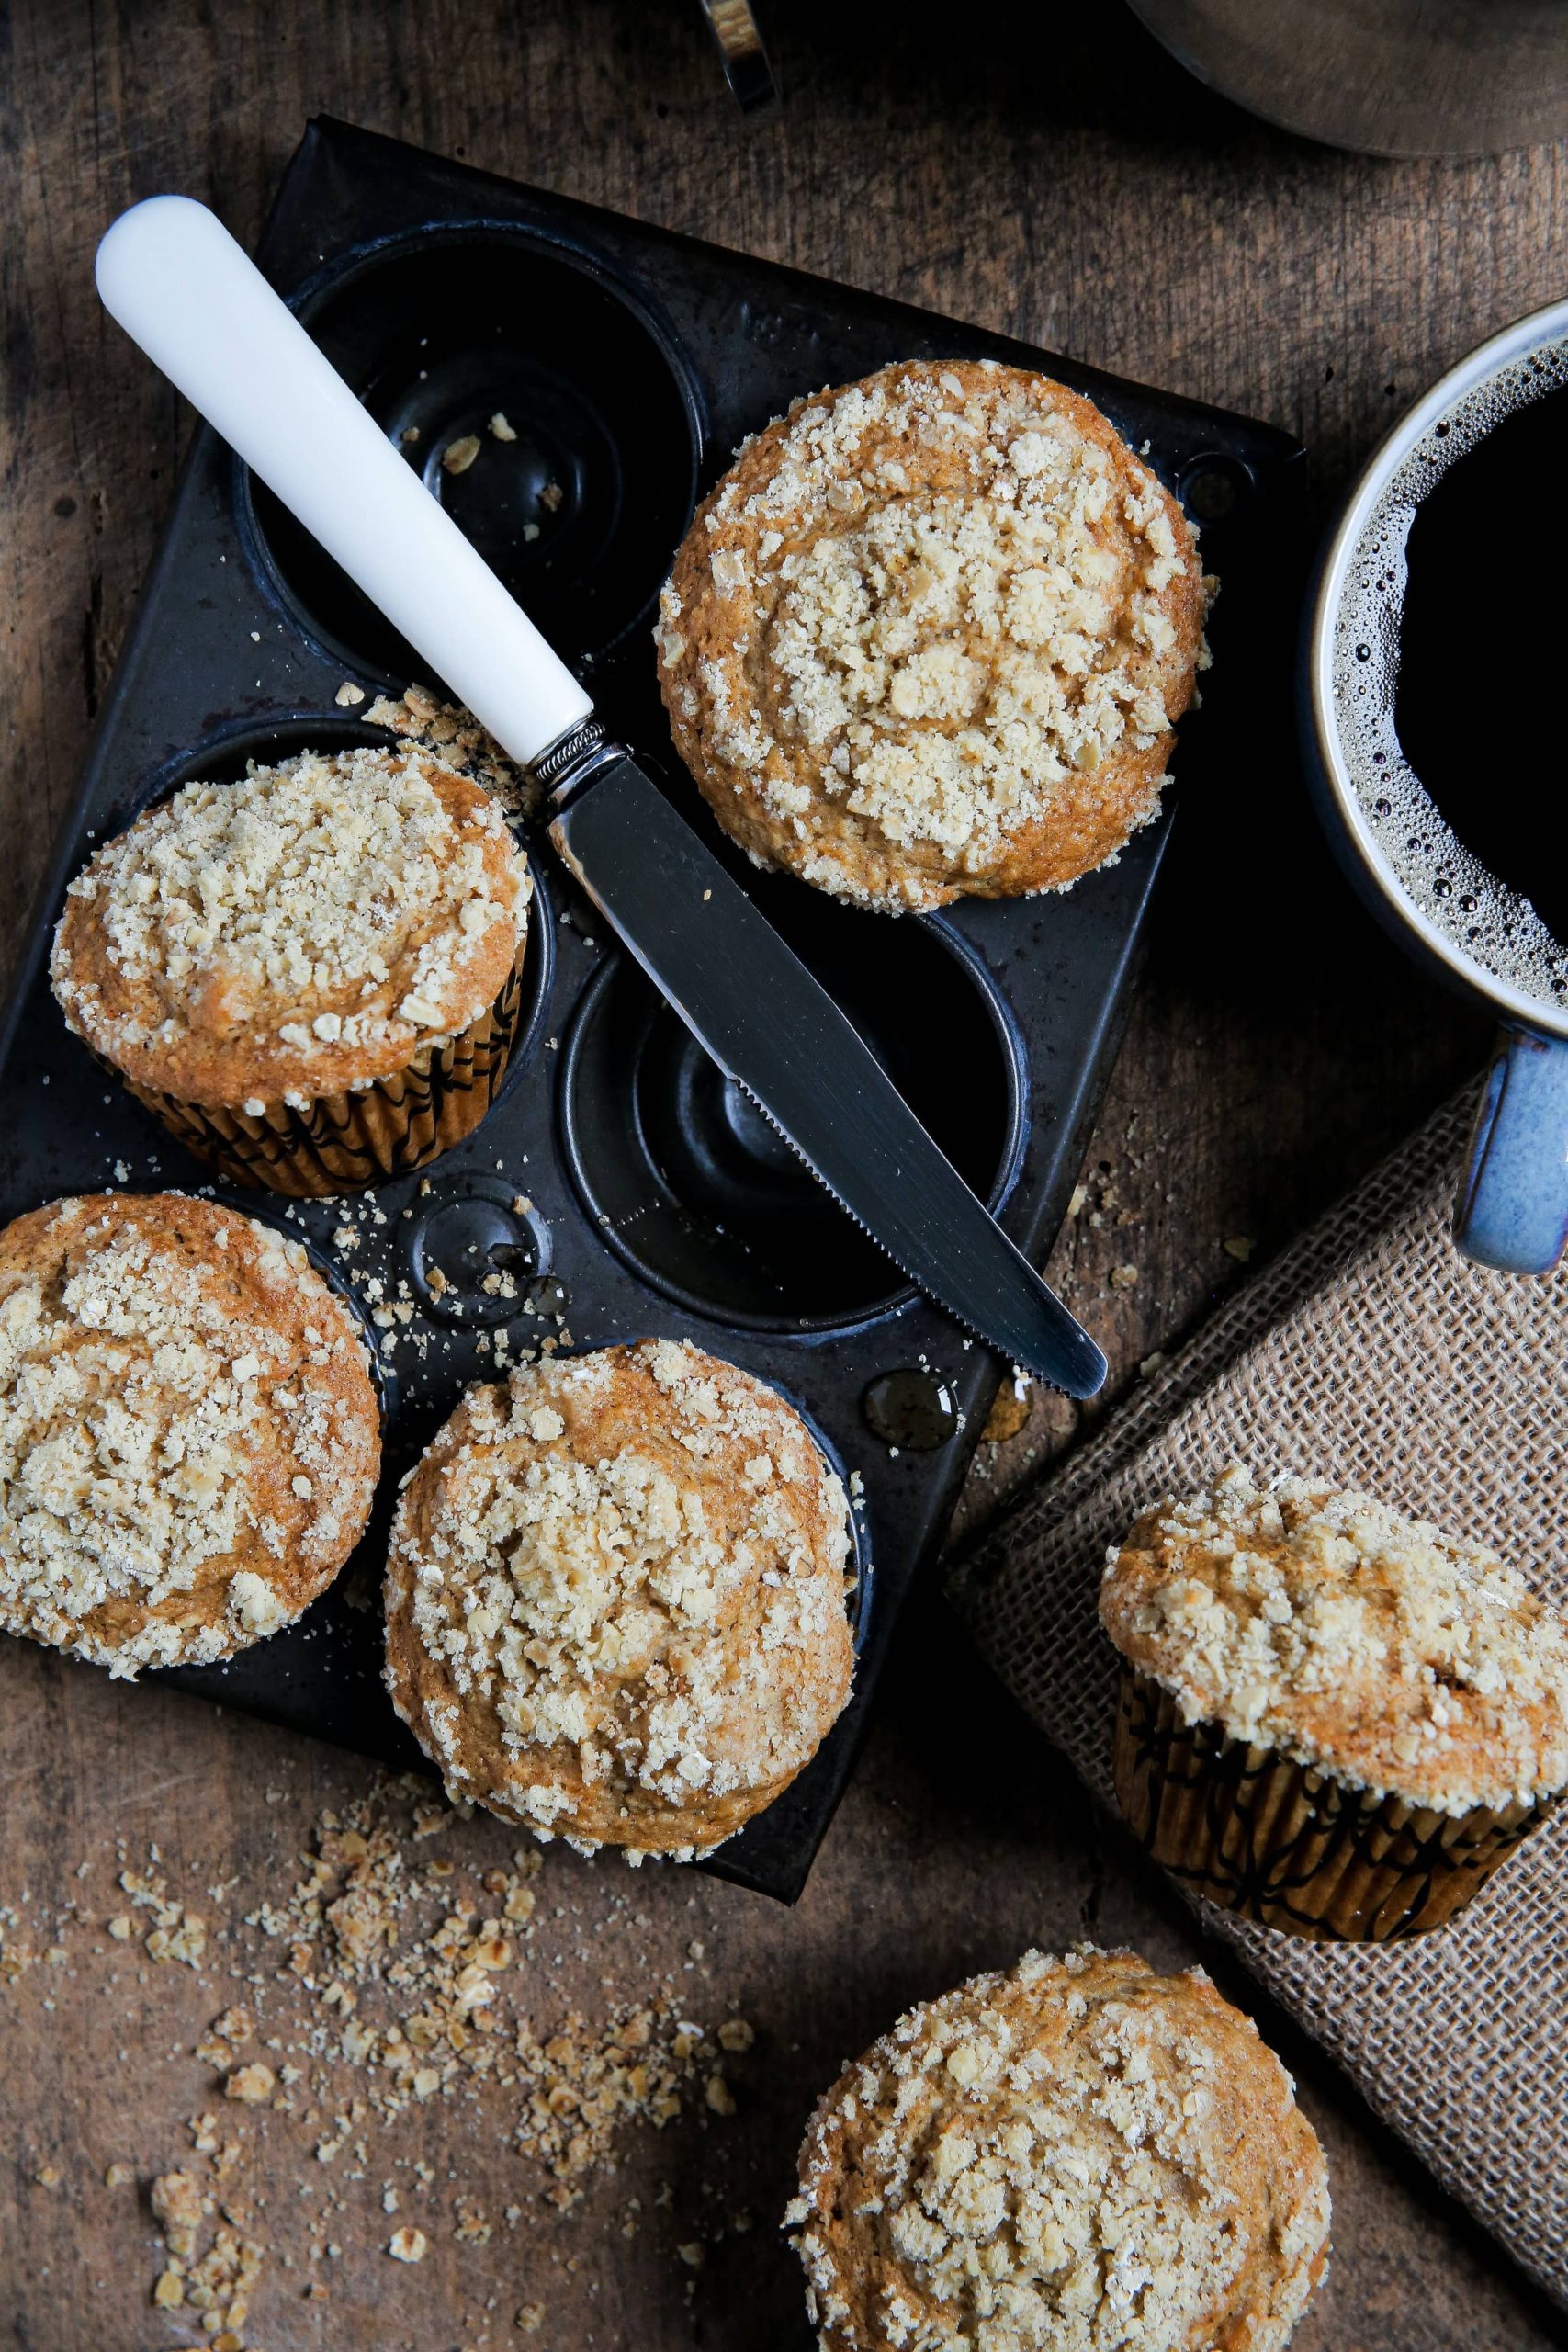 How To Make Sugar-Free Oatmeal Apple Muffins